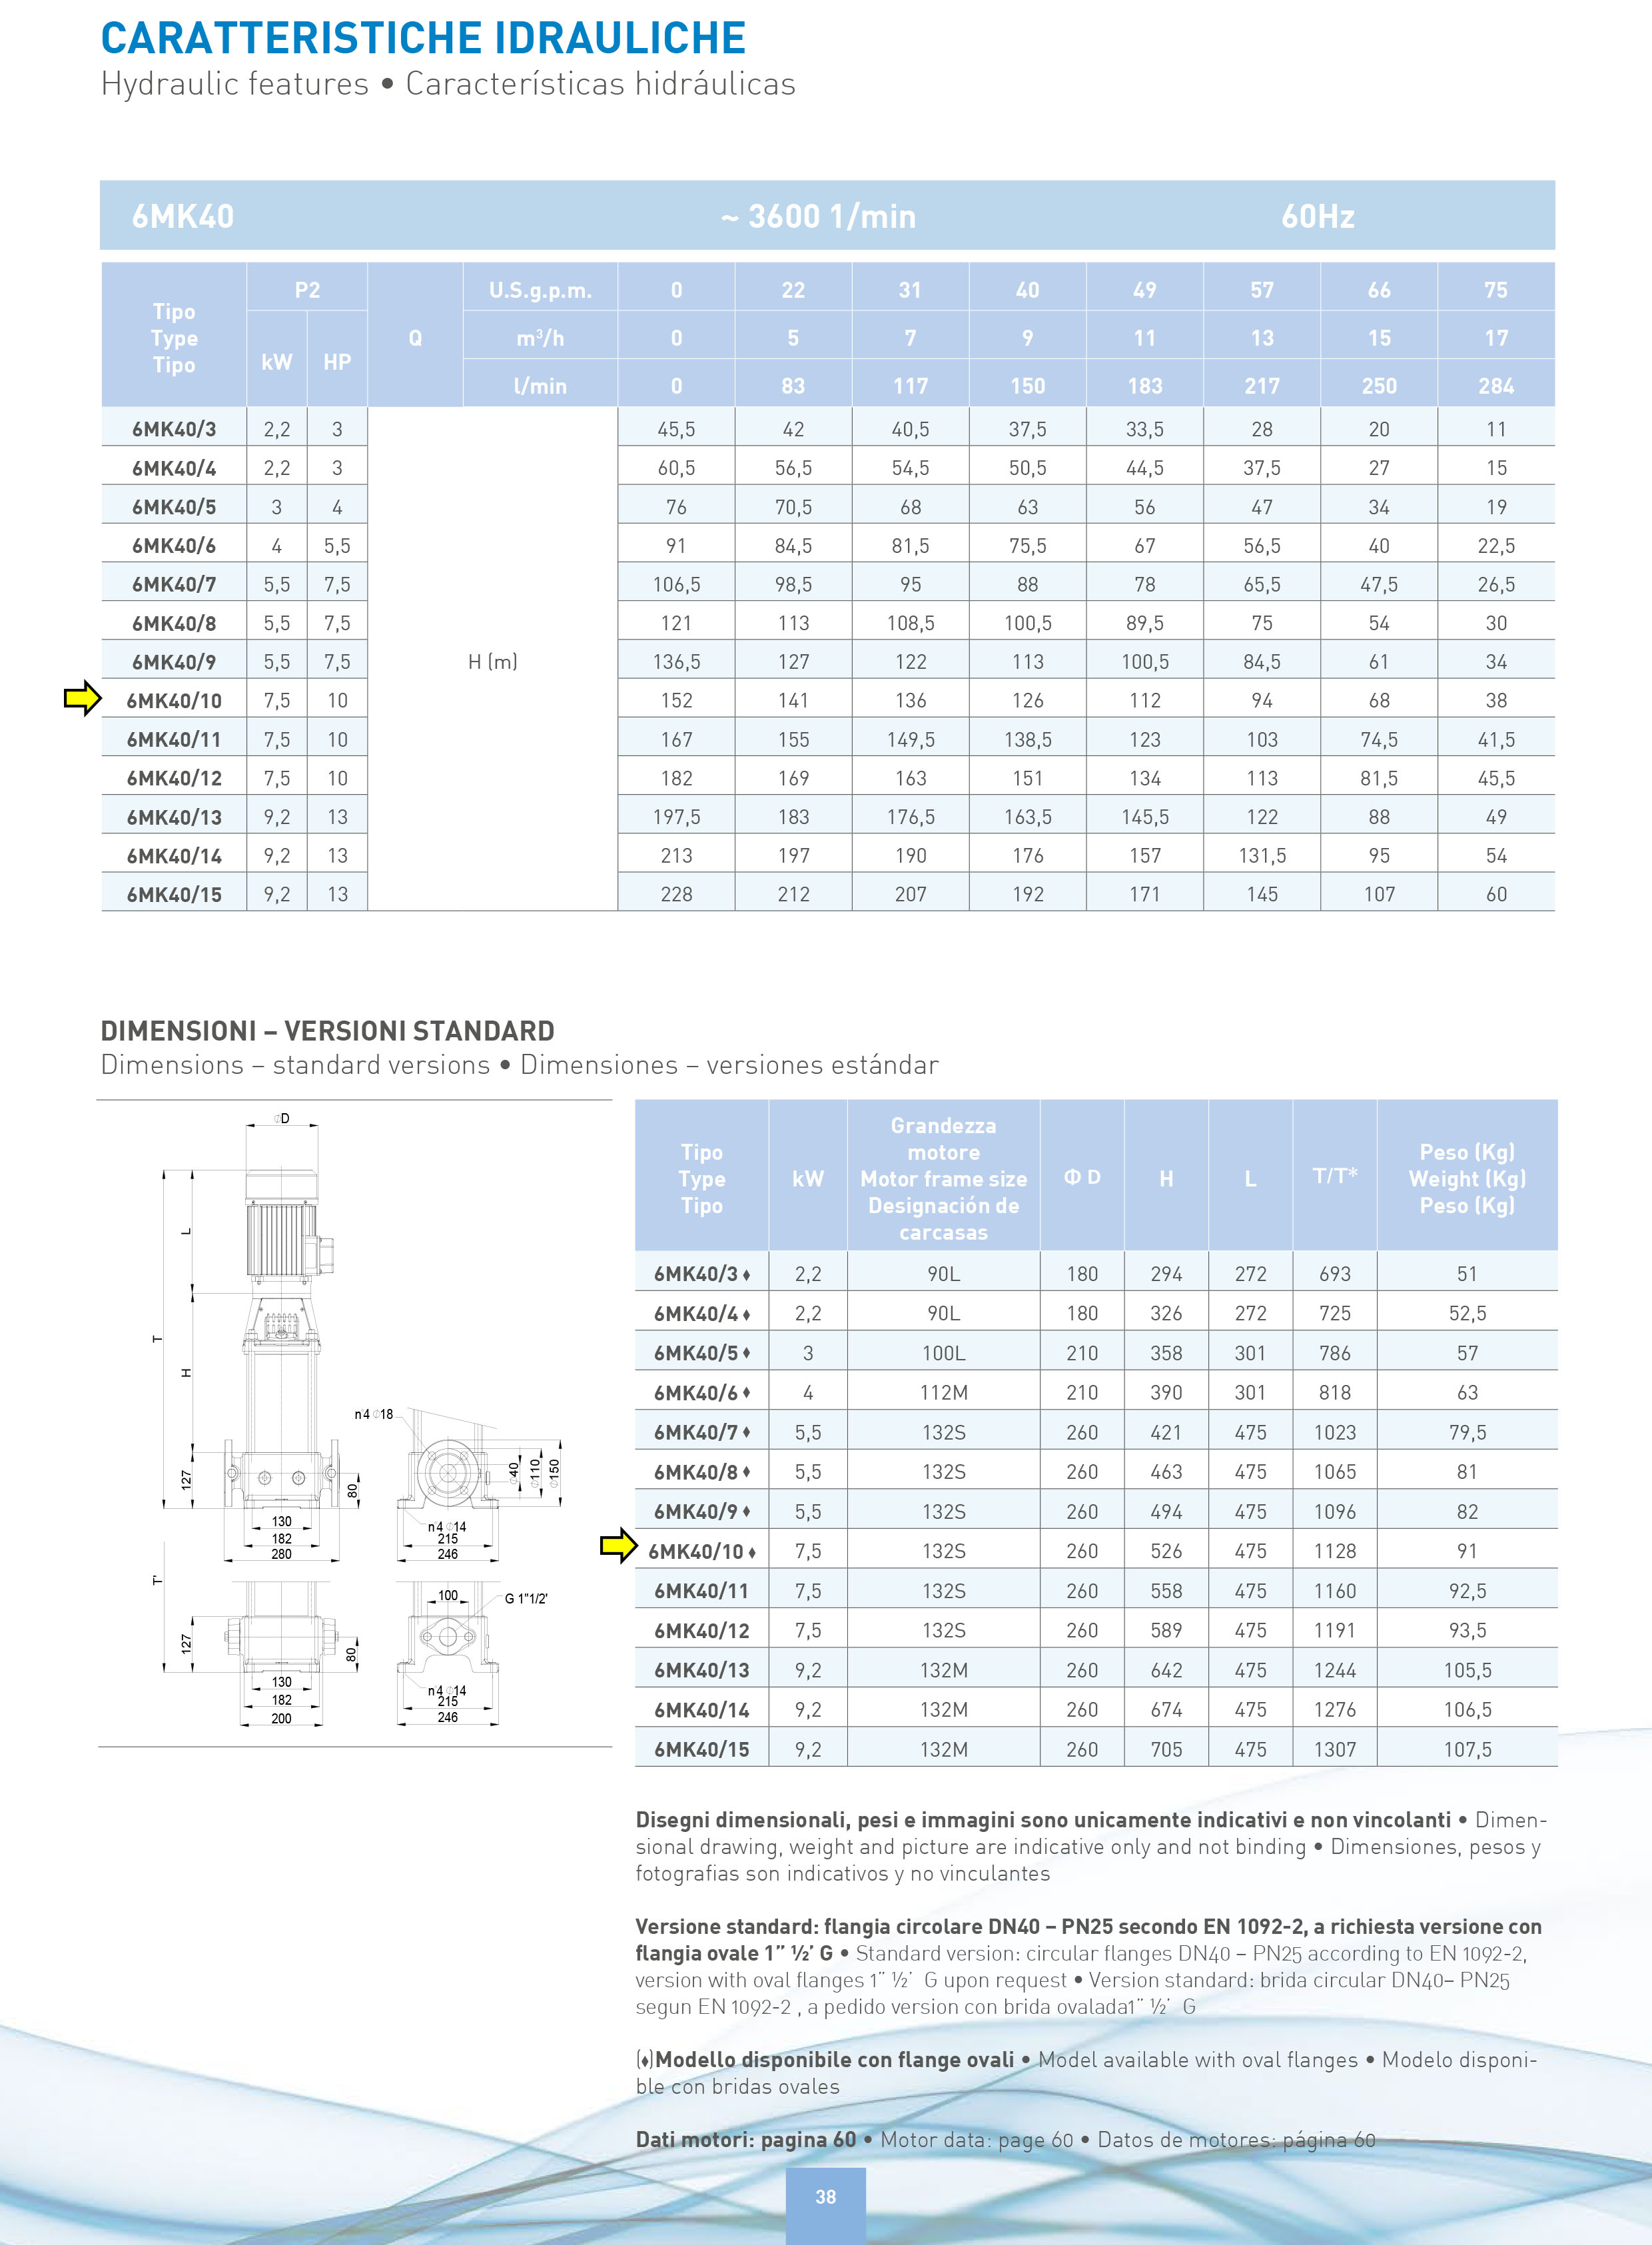 Vertical Multistage Electric Pump — 10 HP, 7.5 Kw, 460V - SAER 6PMK 40/10